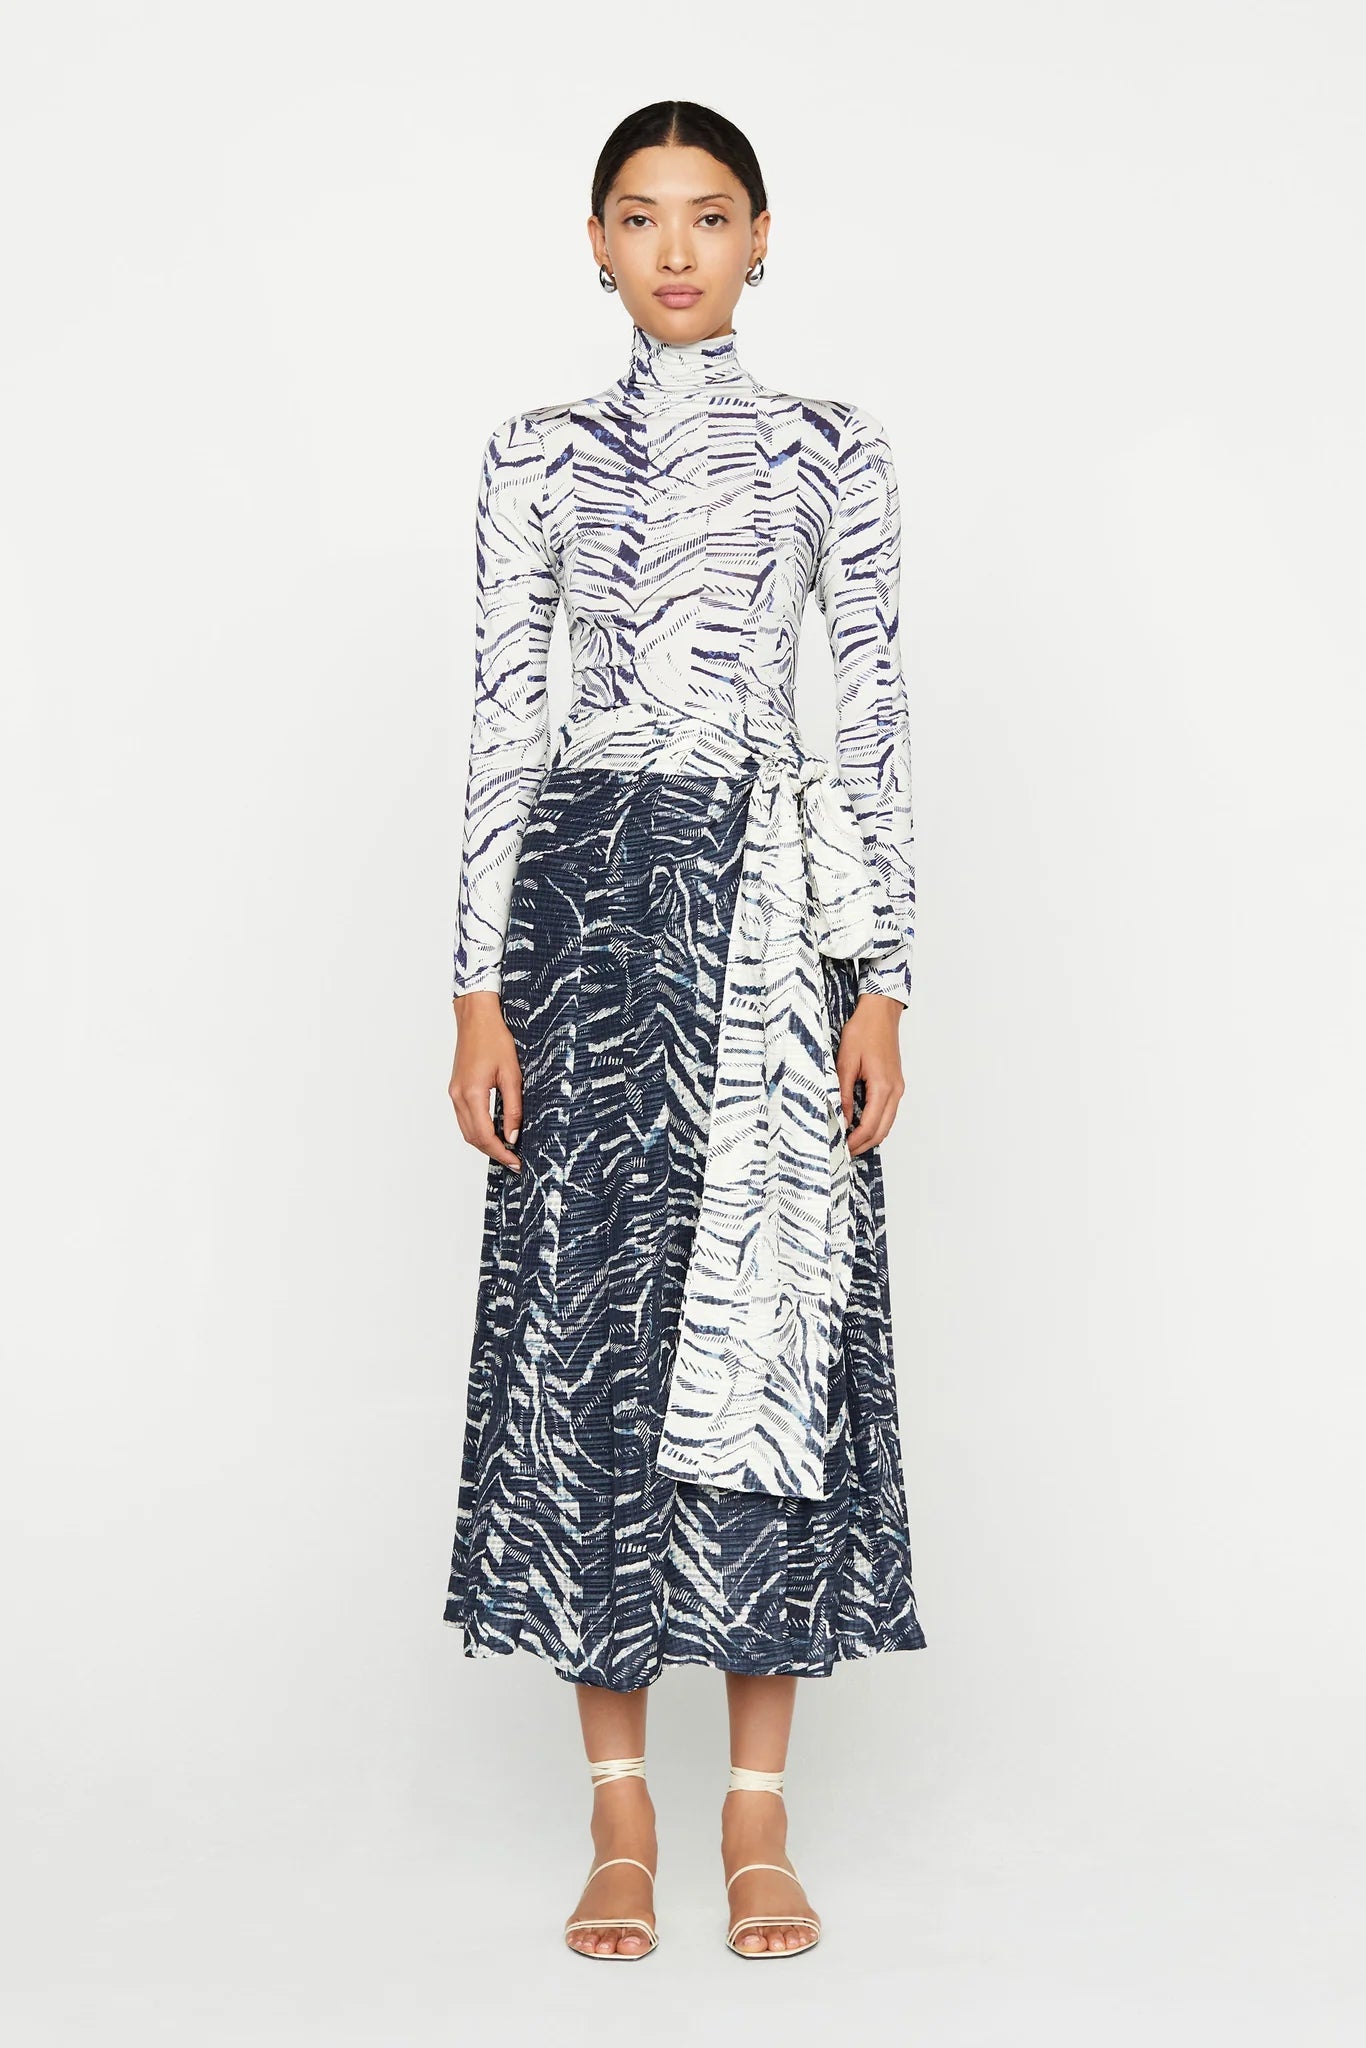 Marie Oliver Estine Wrap Skirt in Indigo Zebra - Estilo Boutique